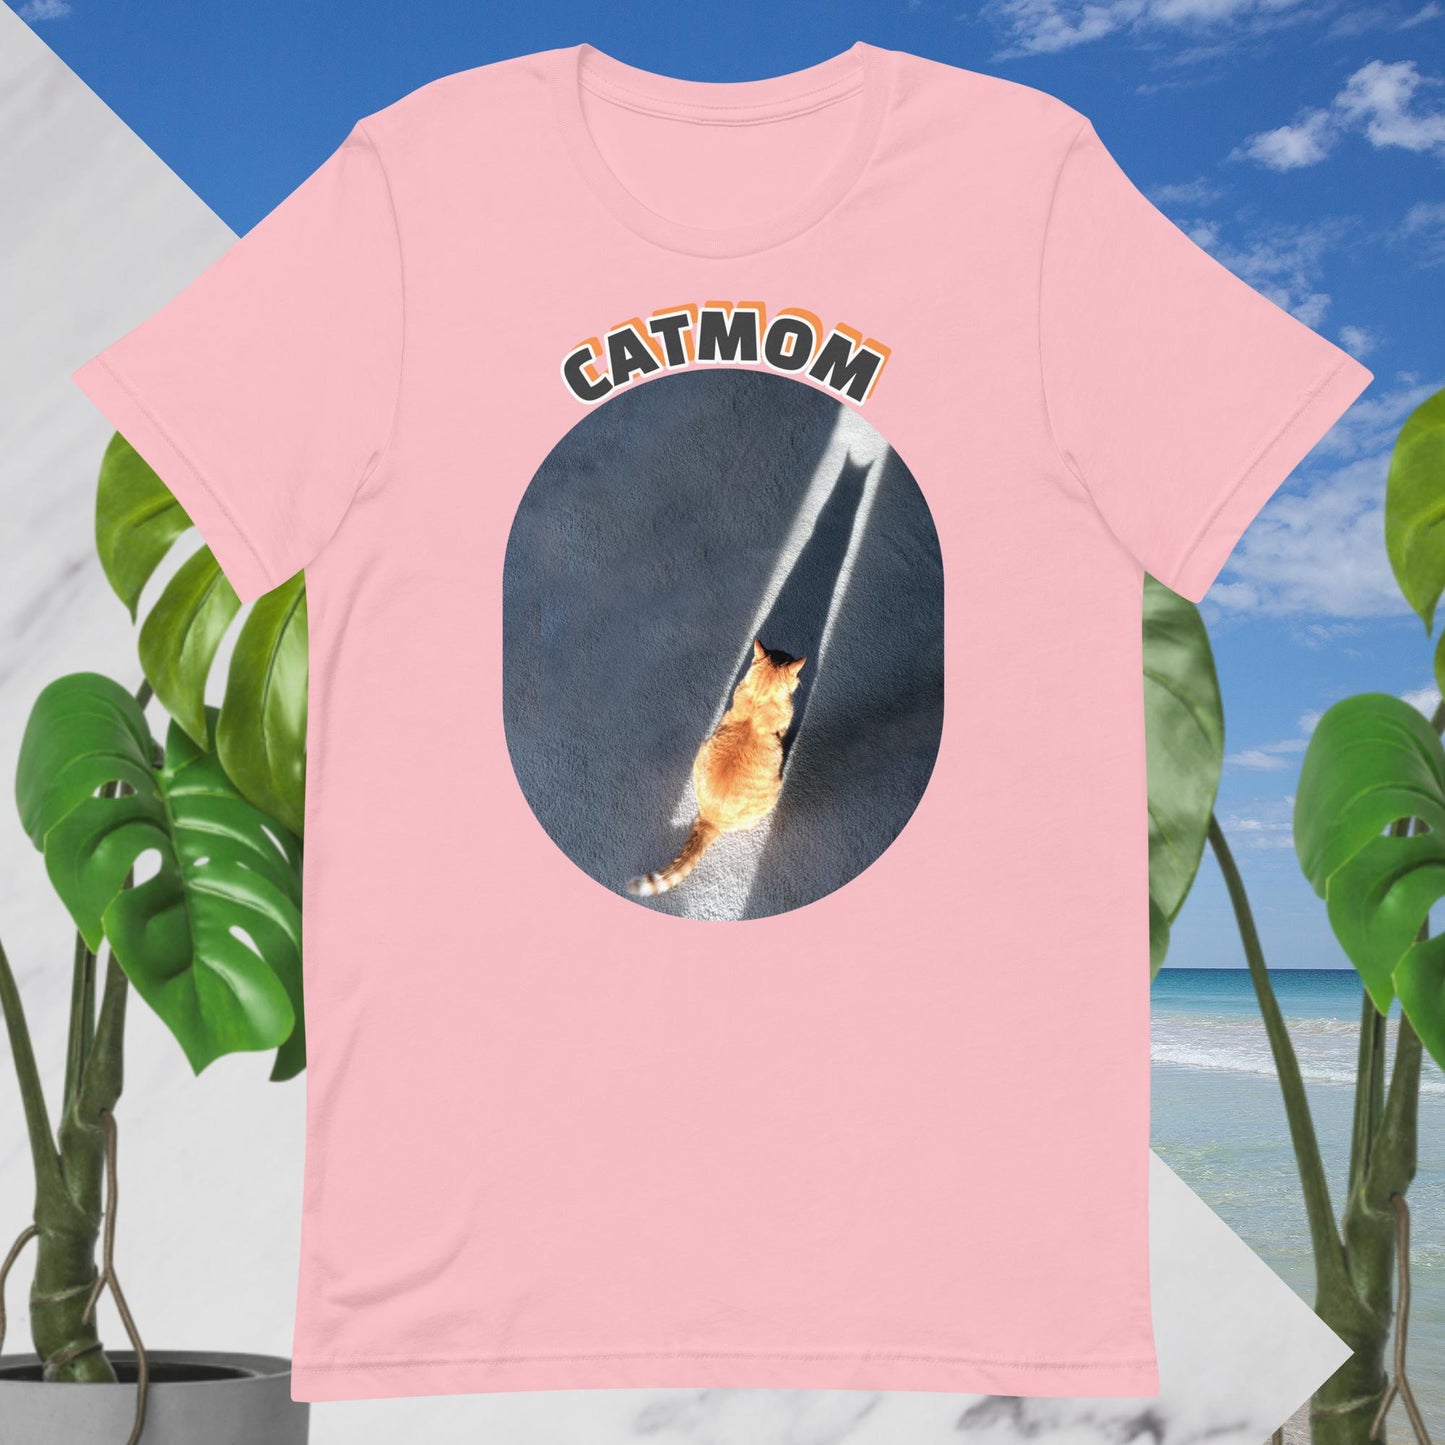 The Catmom T Shirt